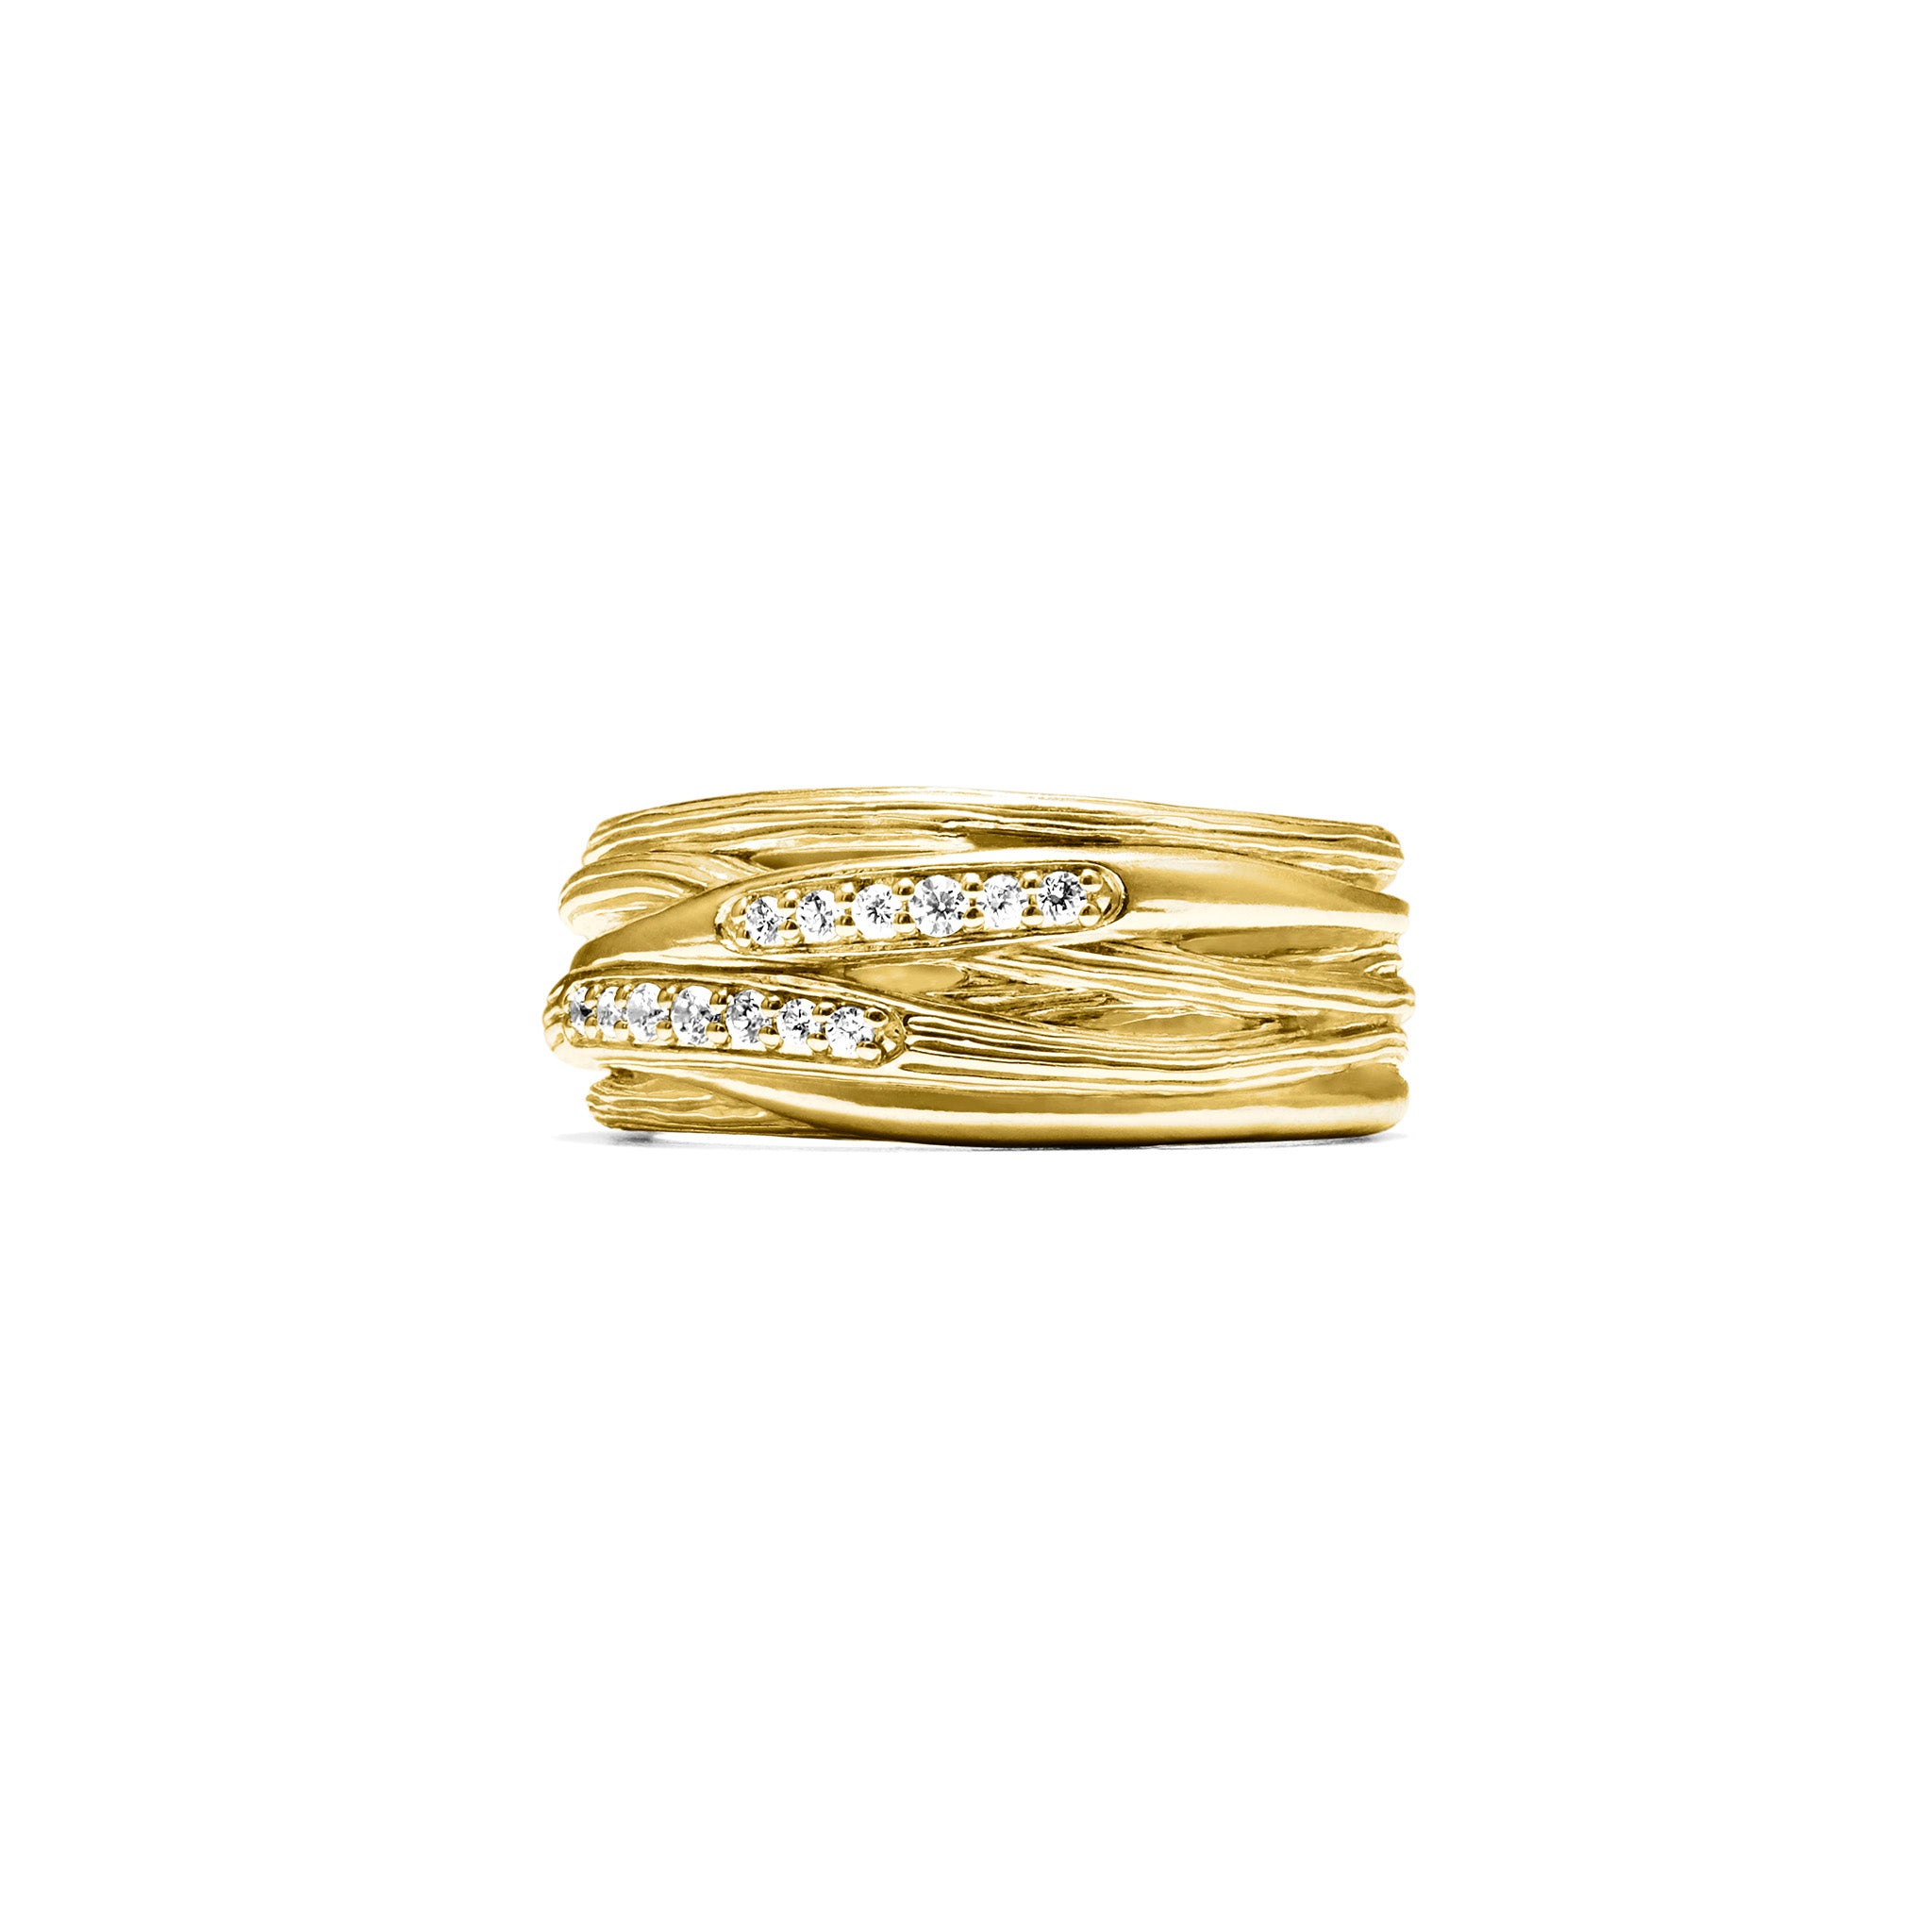 Santorini Band Ring with Diamonds in 18K